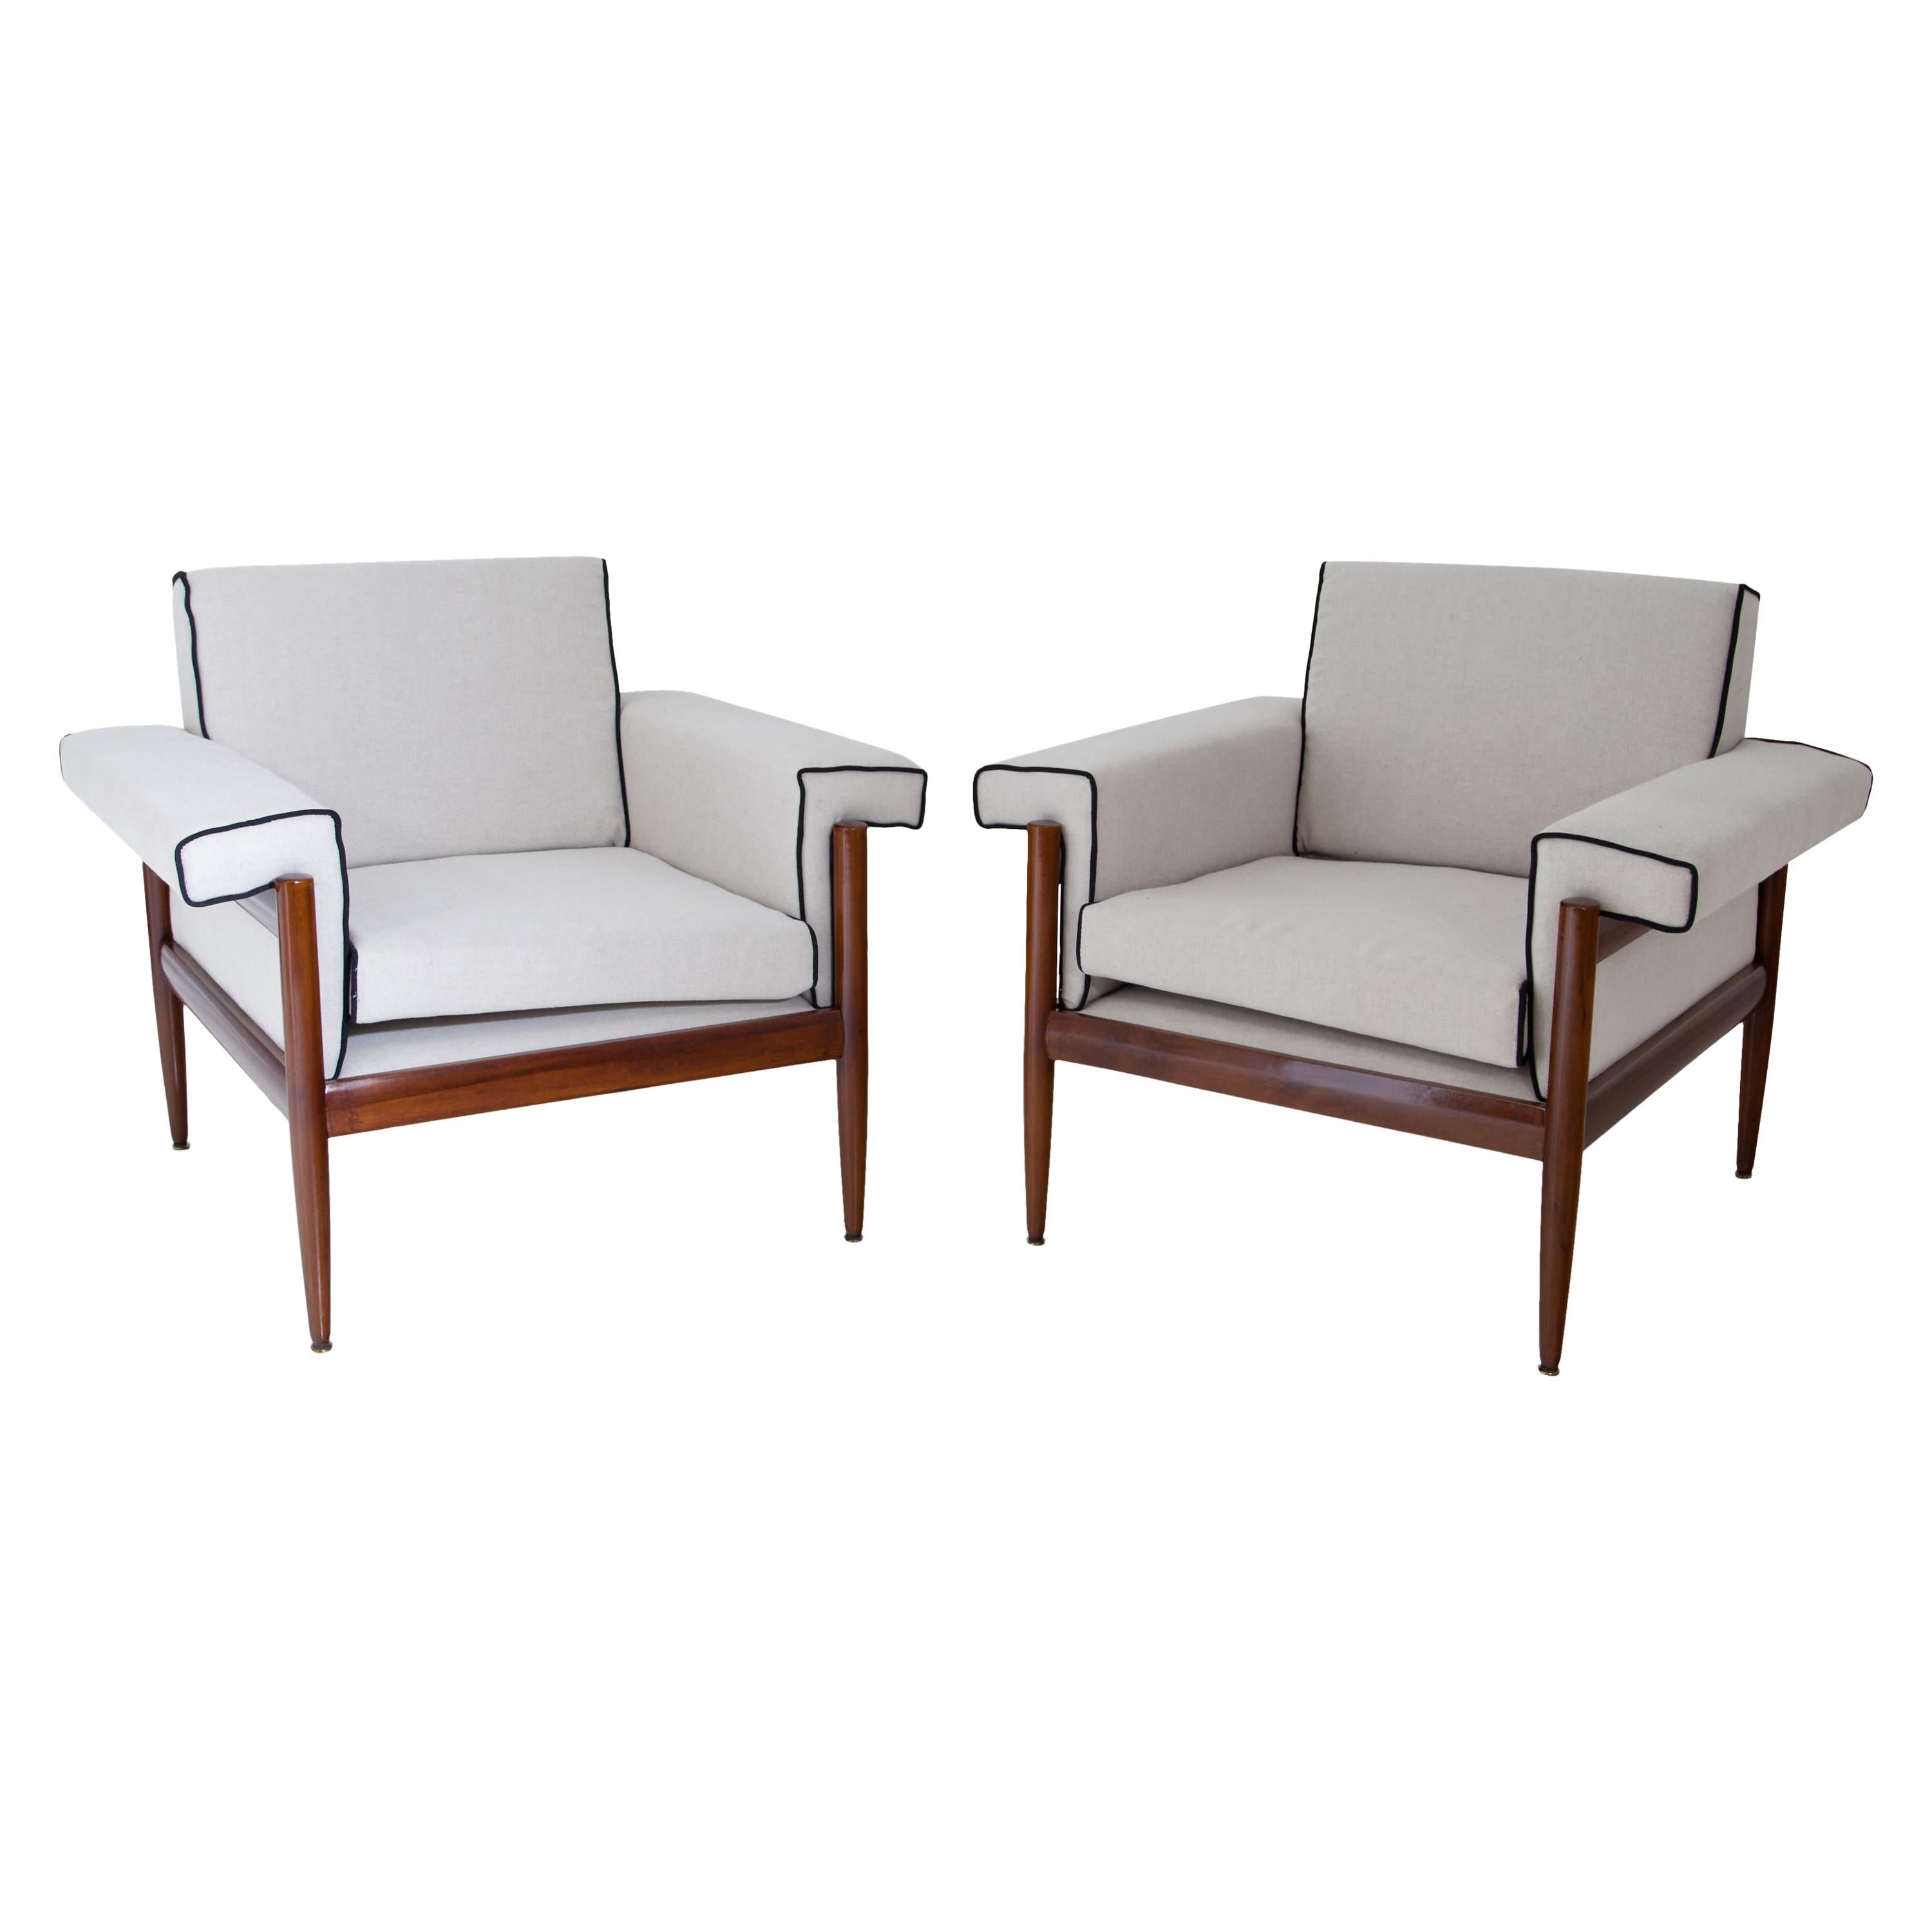 Pair of Italian Design Lounge Chairs, Trafilisa Isa Bergamo, Italy 1950s